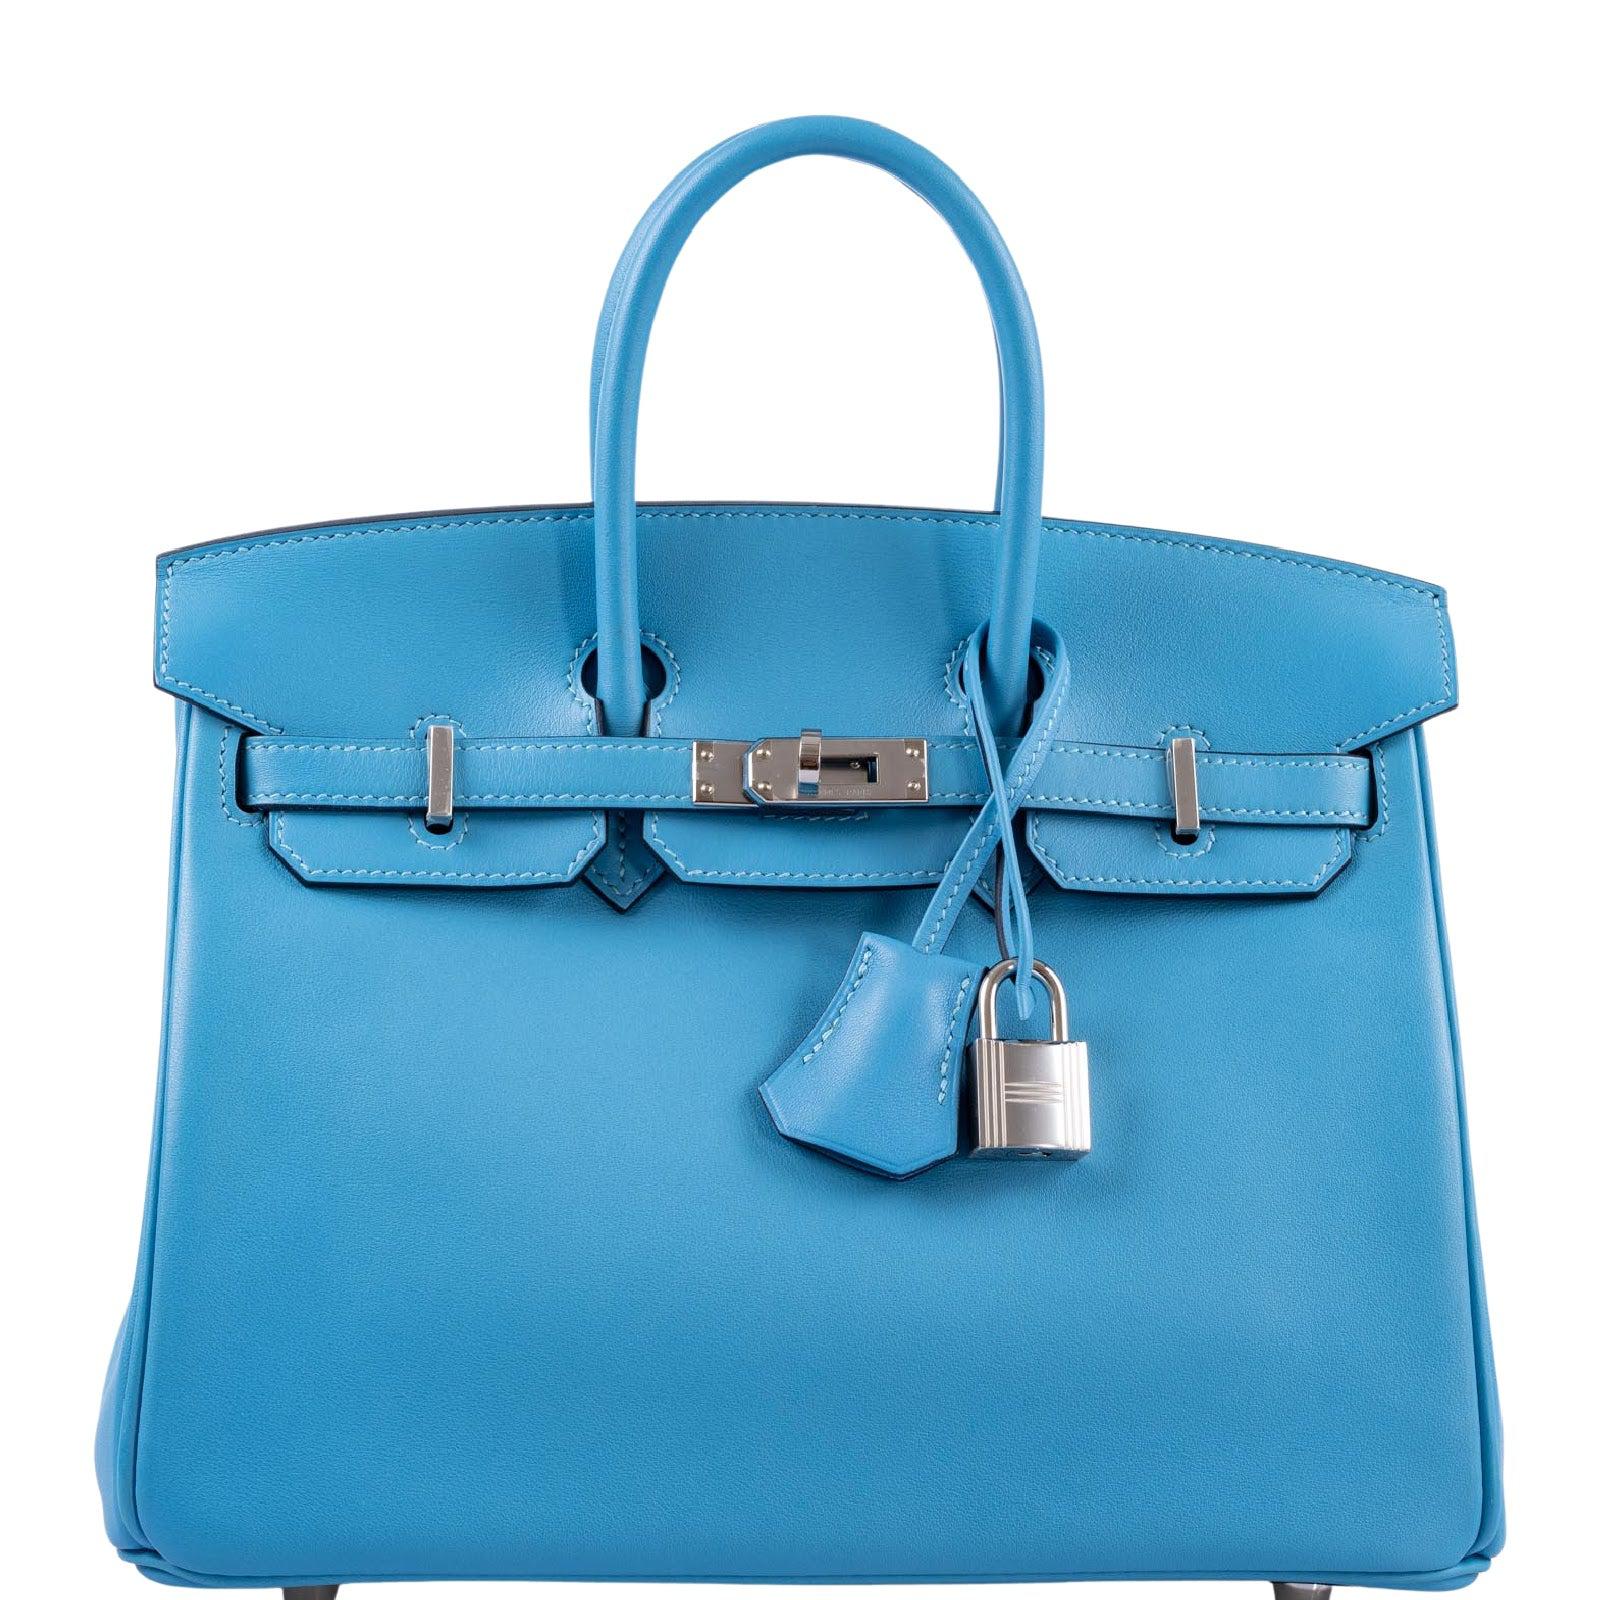 Hermes Constance small shoulder bag in blue du nord Swift leather